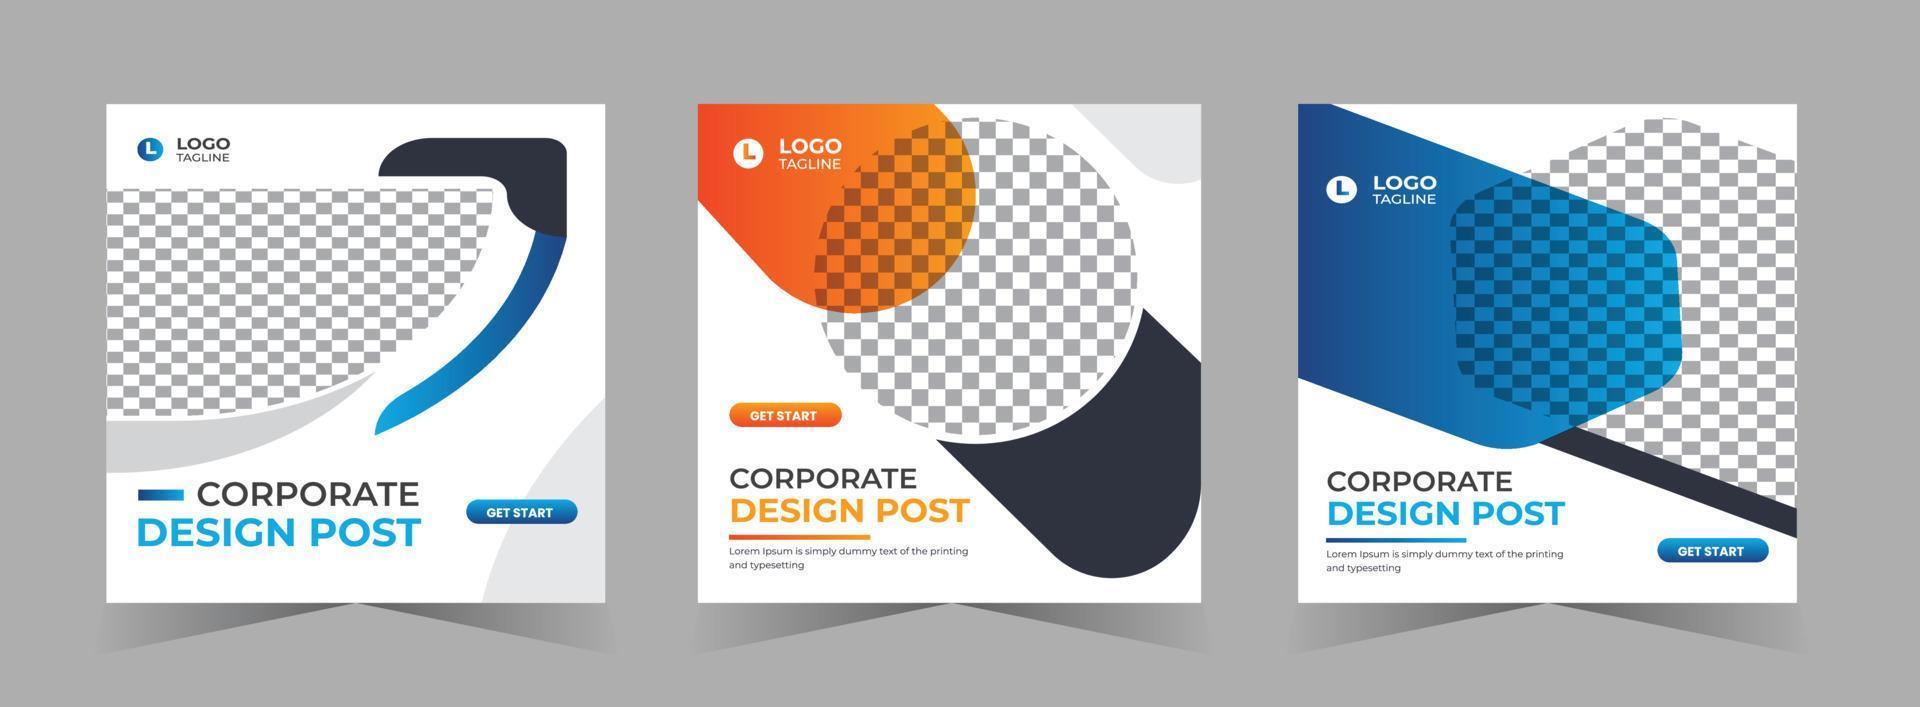 Creative marketing social media and web banner template design vector